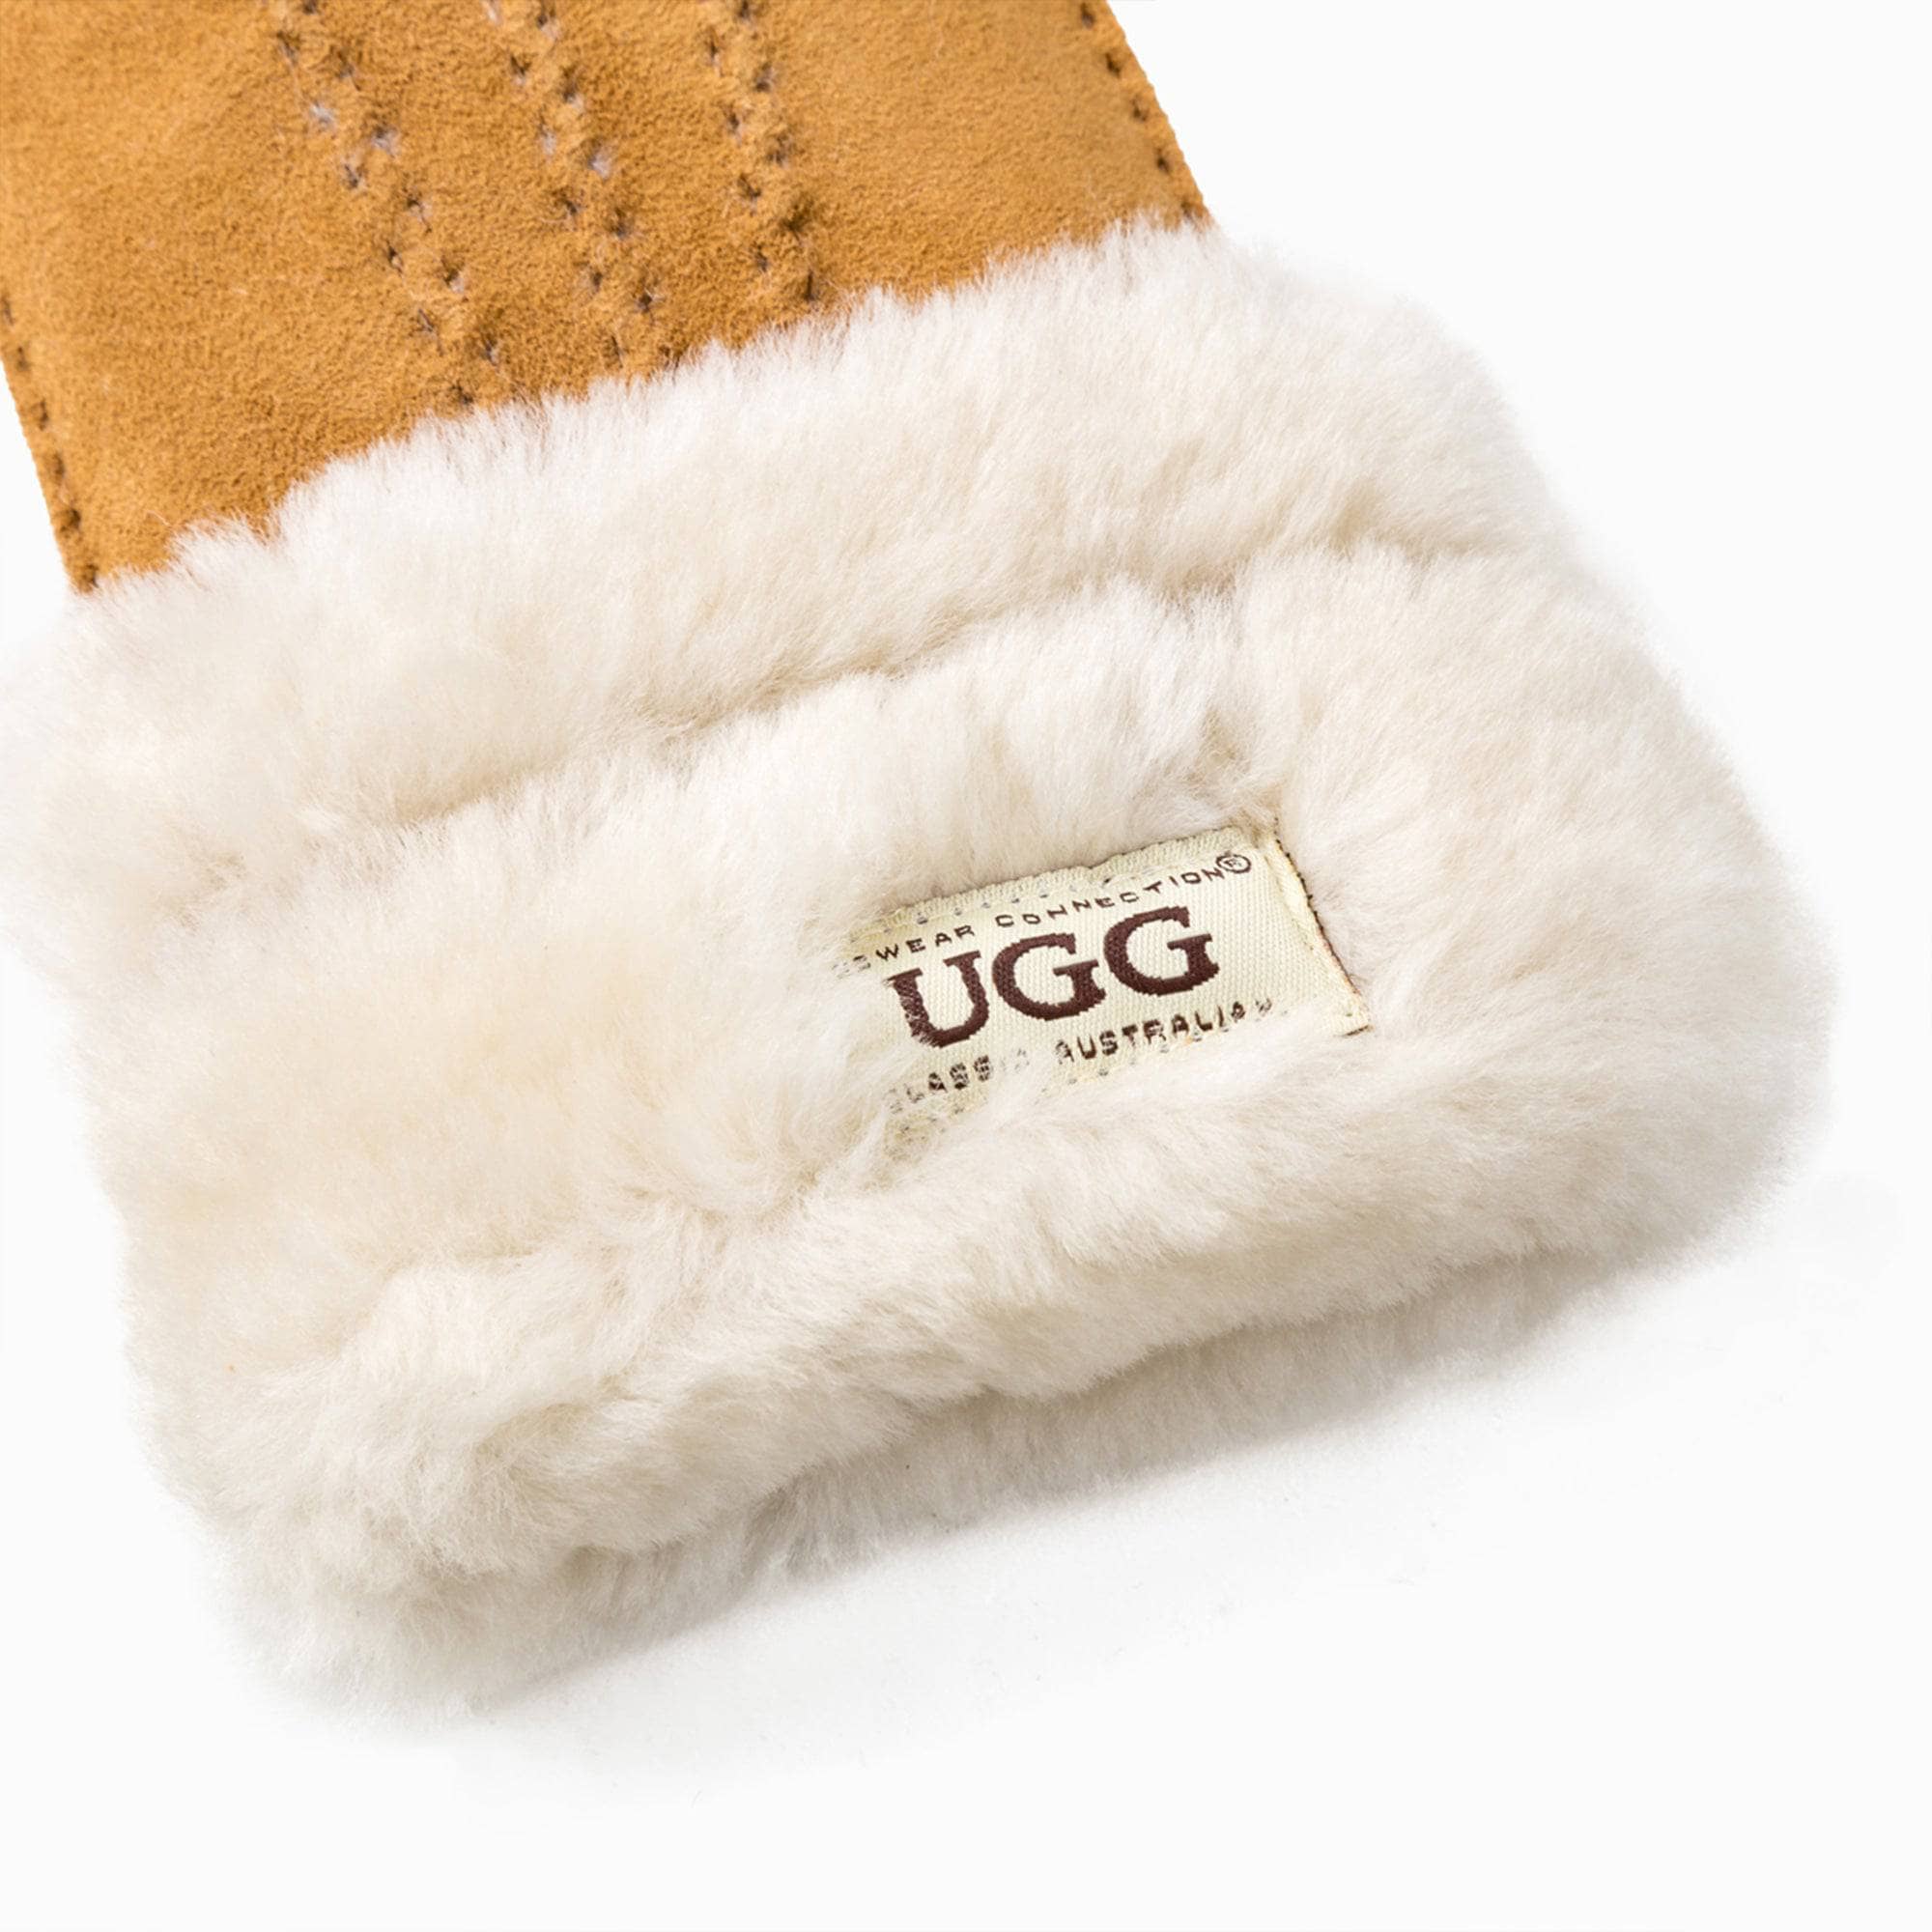  - UGG Premium Double Cuff Sheepskin Gloves - Original UGG Australia Classic